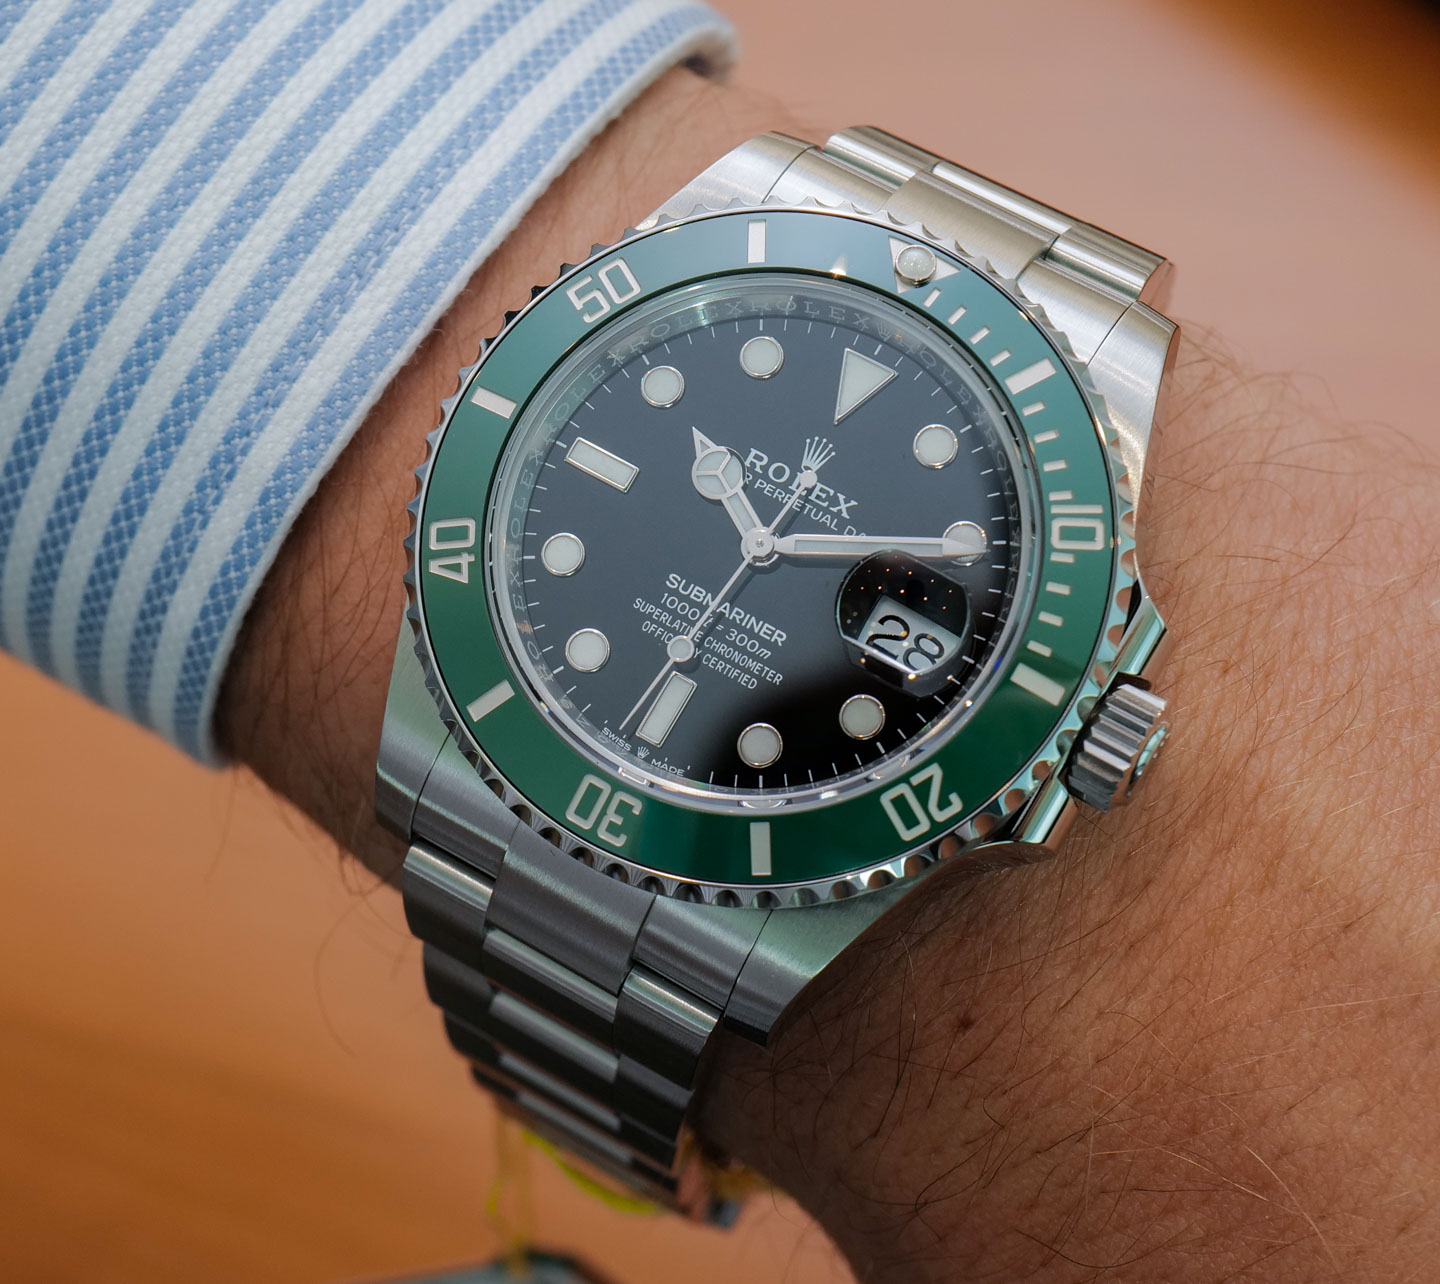 Rolex Submariner 126610LV fake Watch With Green Ceramic Bezel Debut